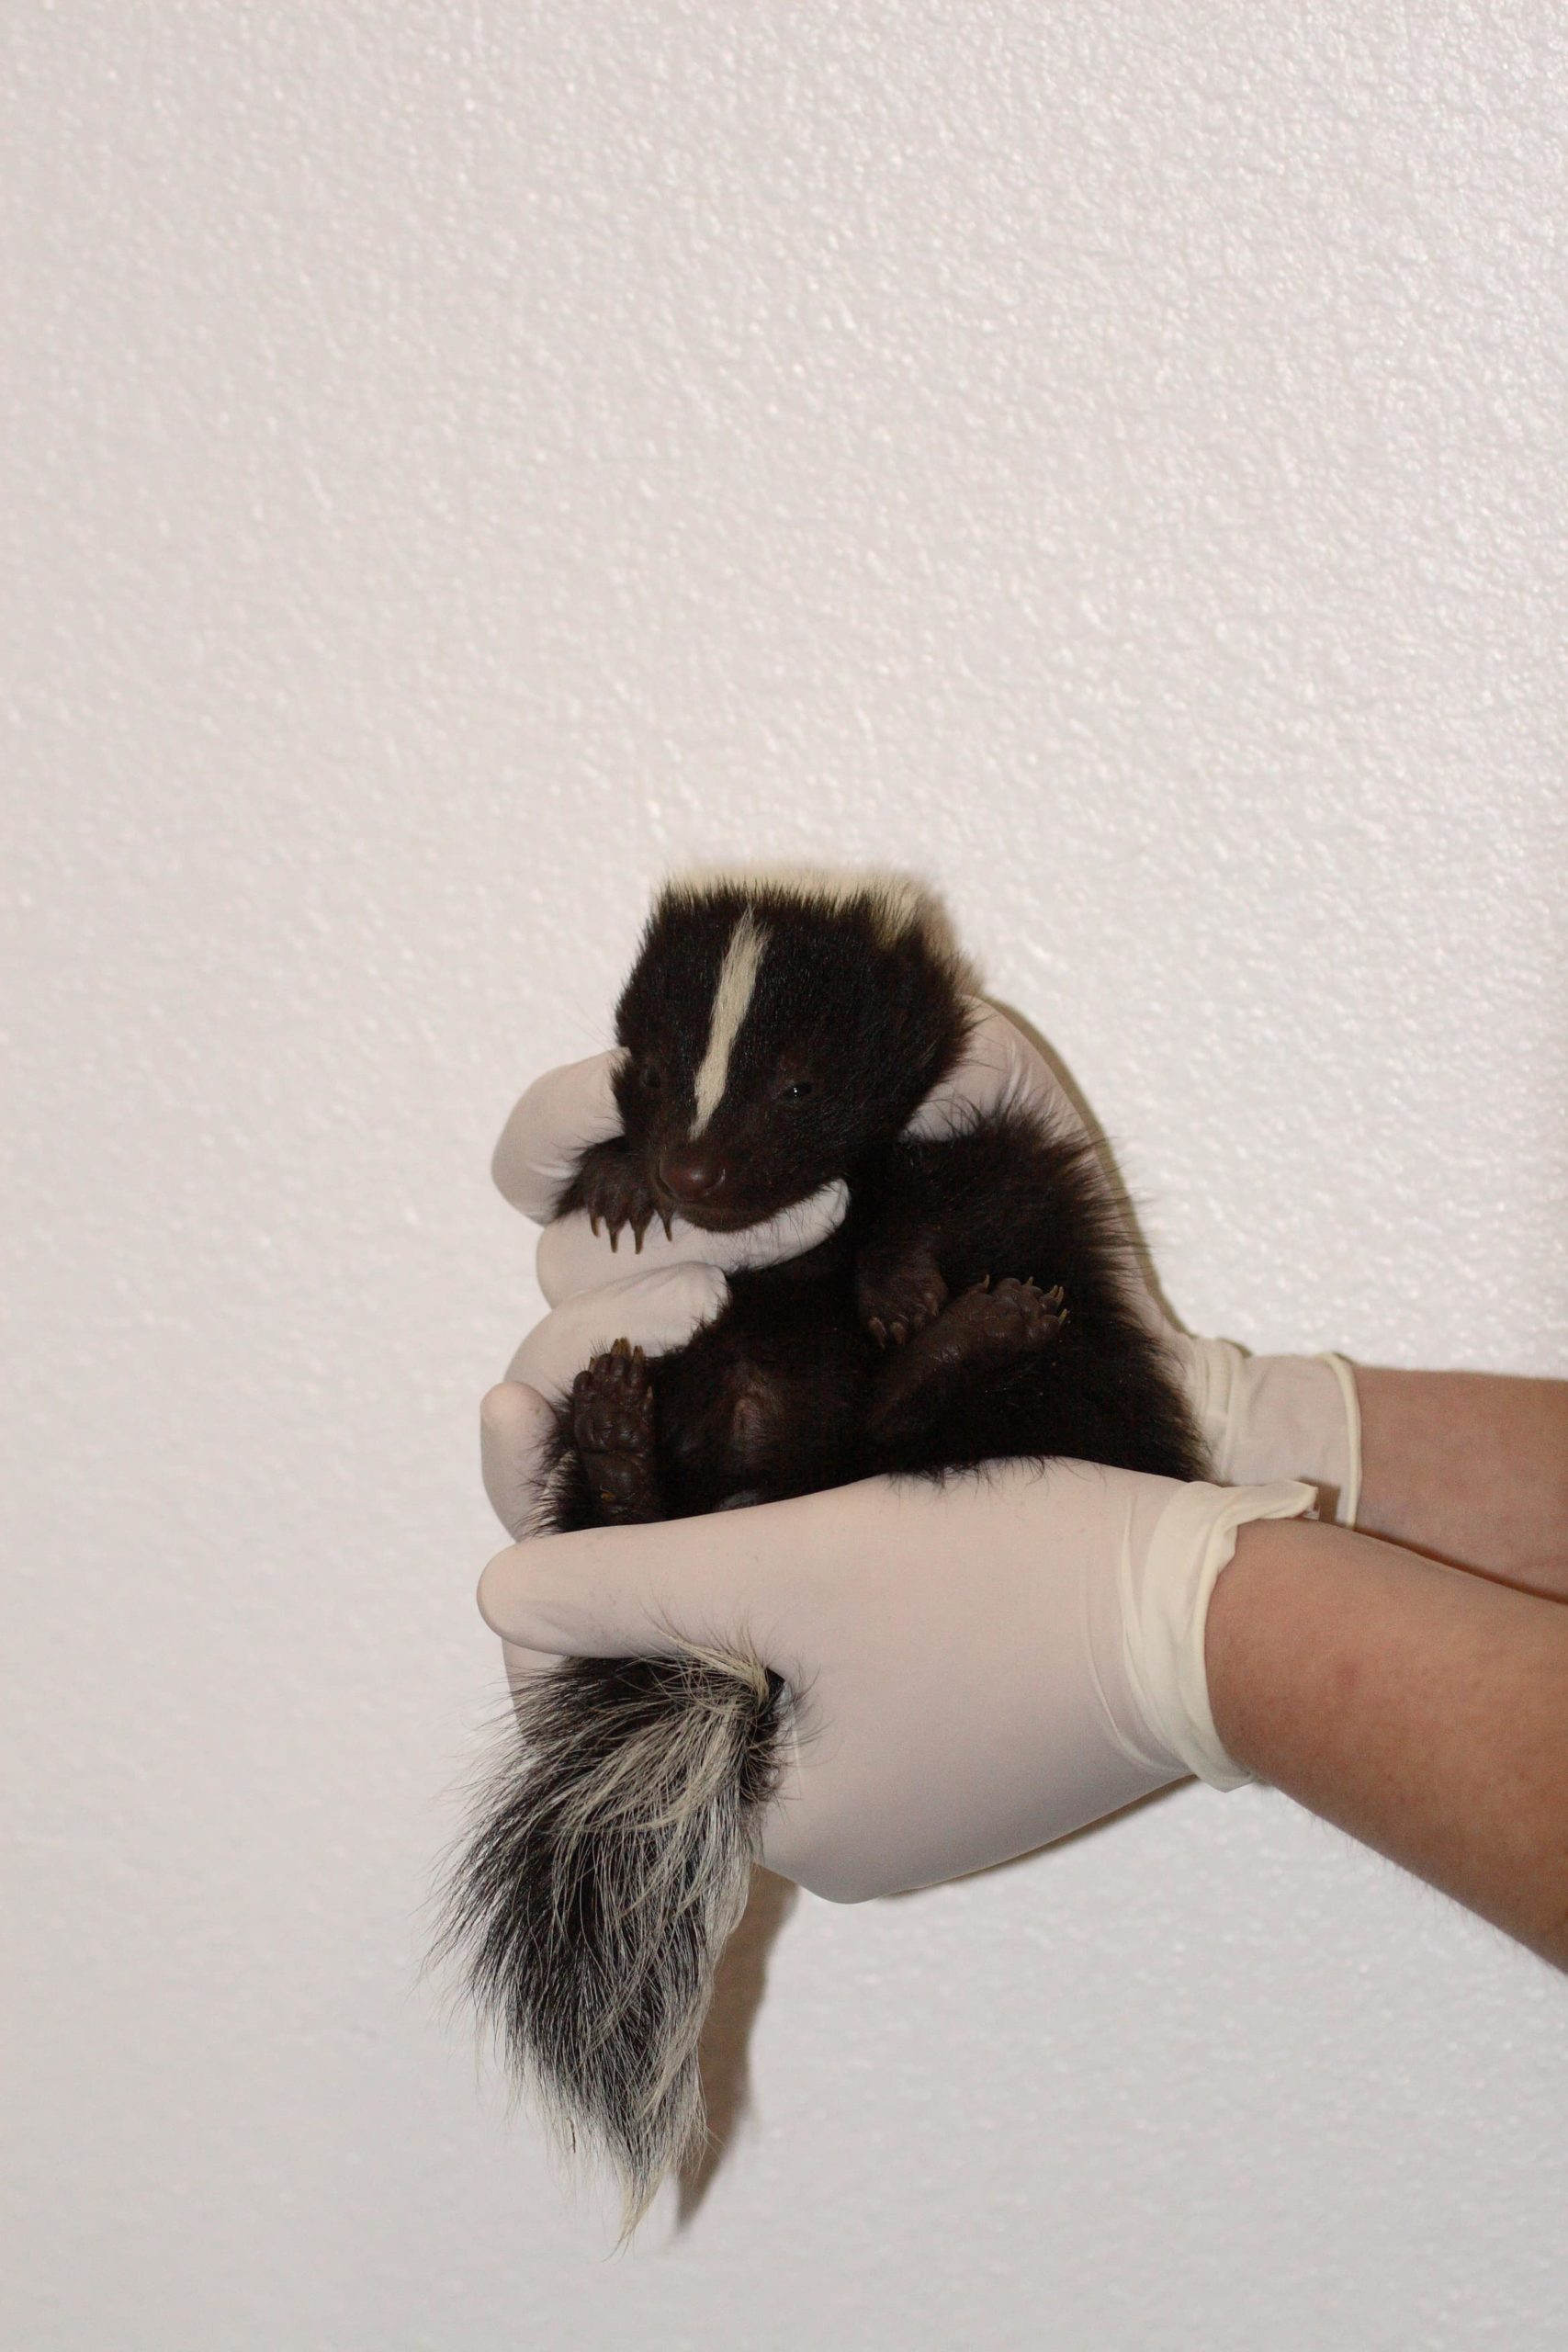 Baby striped skunk